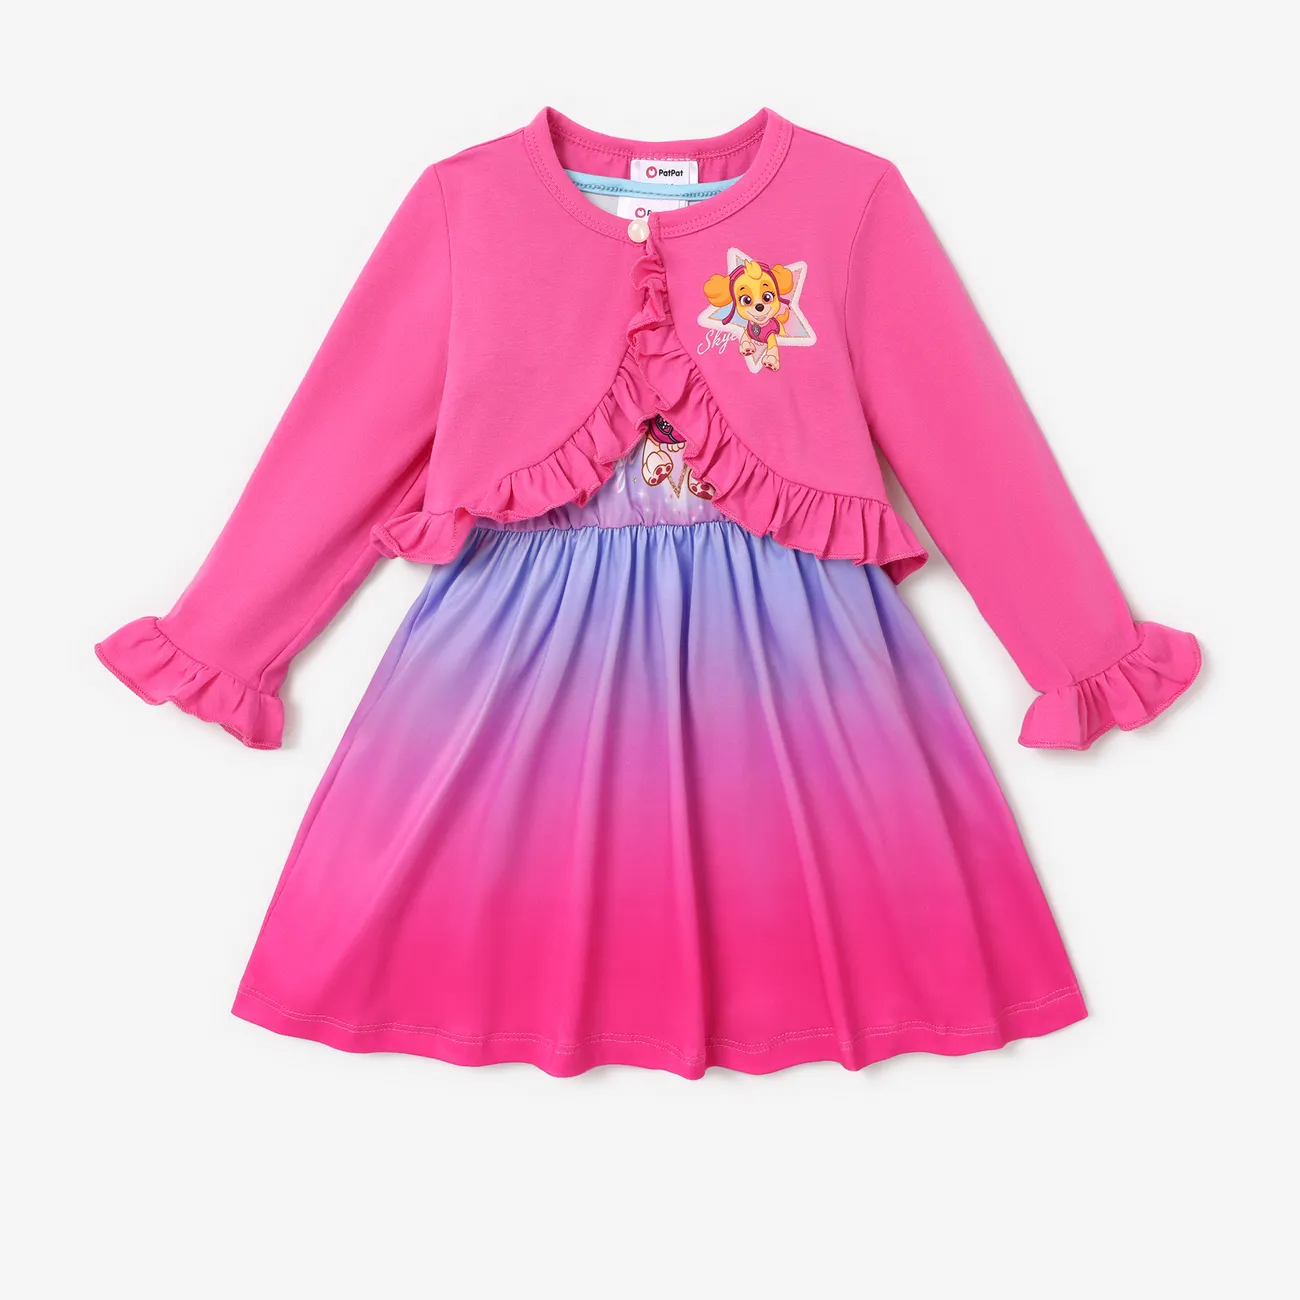 PAW Patrol Toddler Girl Graphic Long-sleeve Ruffle Top and Dress Set  Roseo big image 1